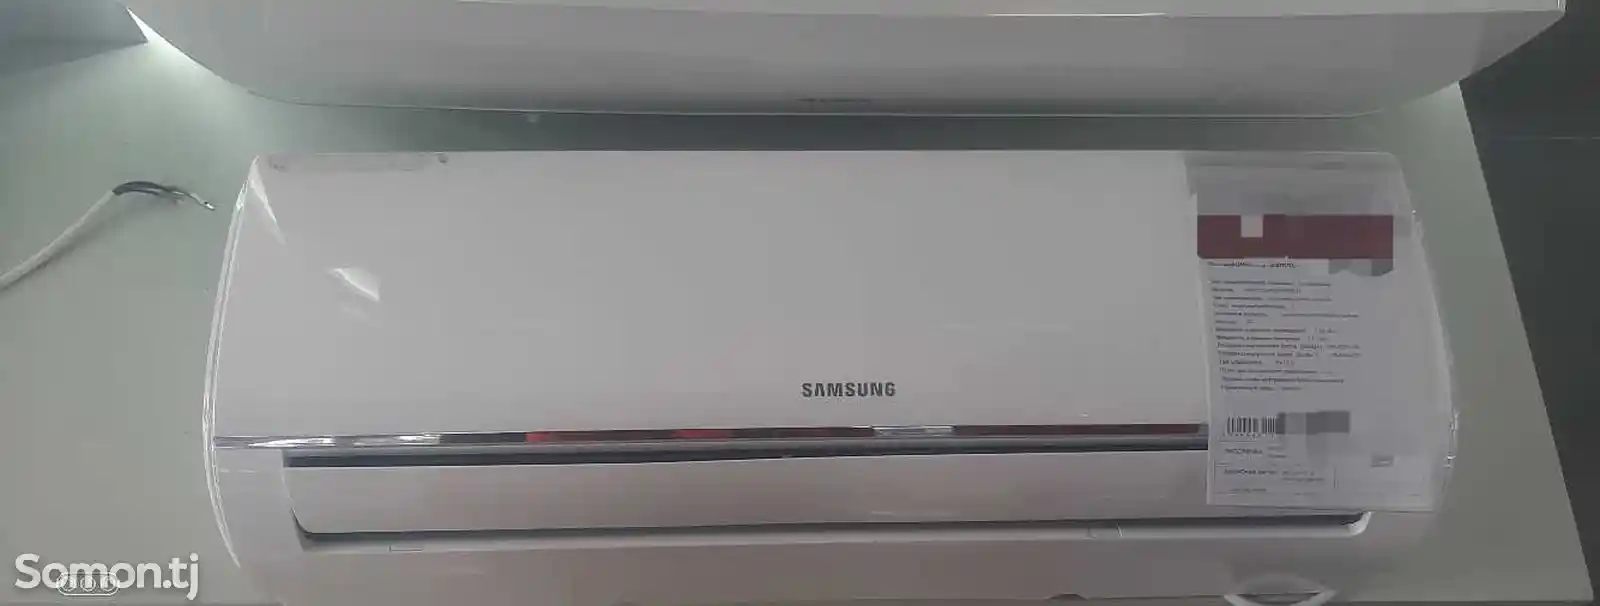 Кондиционер Samsung 24-1